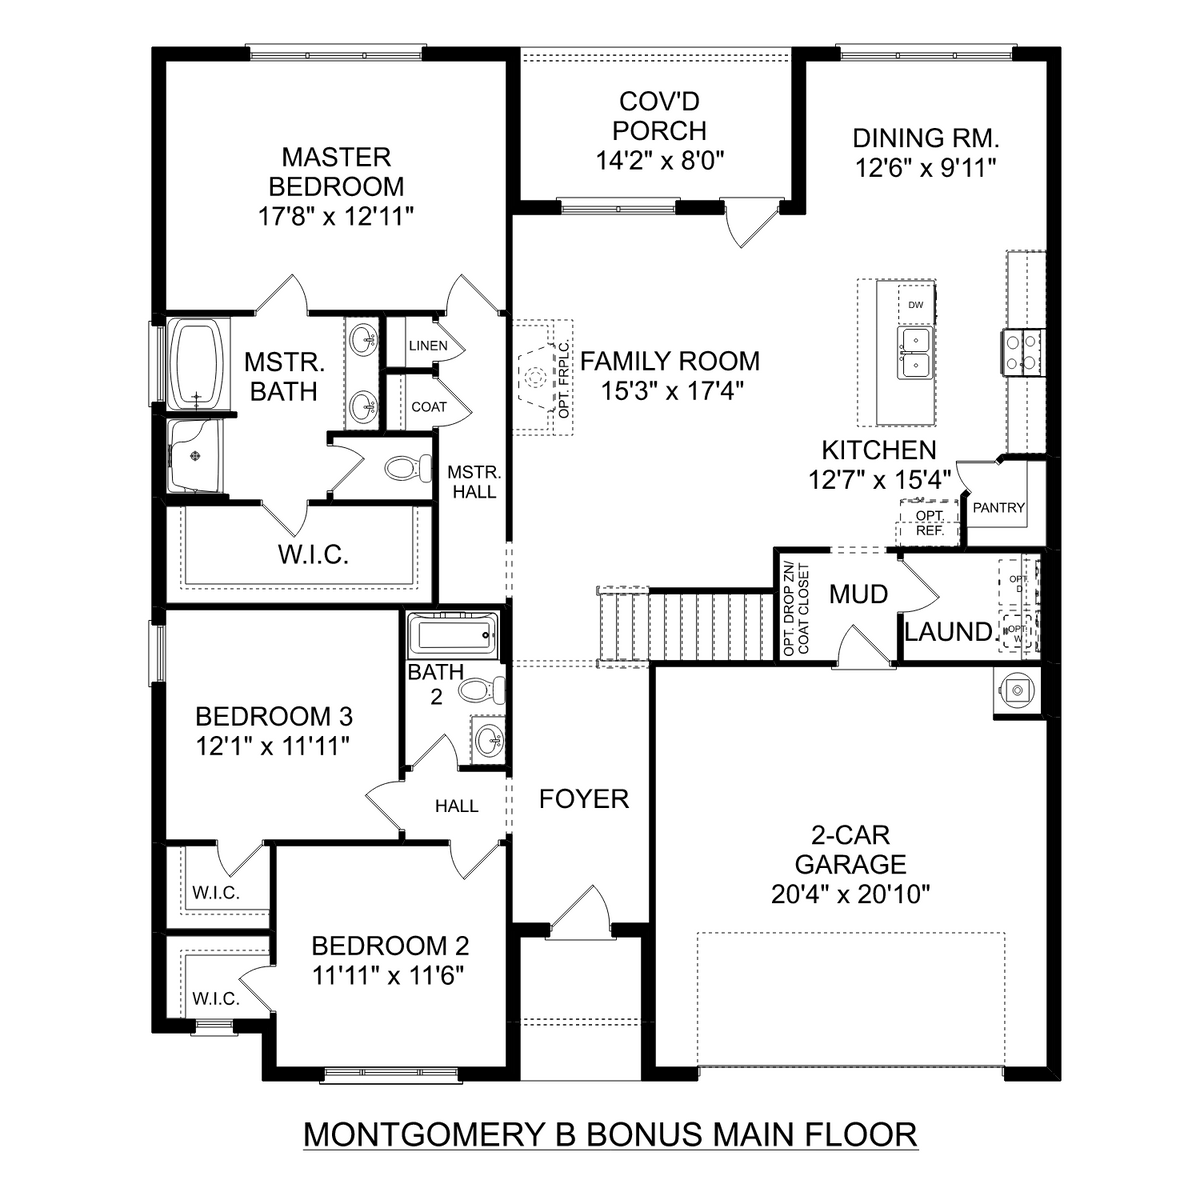 1 - The Montgomery B With Bonus floor plan layout for 608 Magnolia Cove Lane SW in Davidson Homes' Magnolia Preserve community.